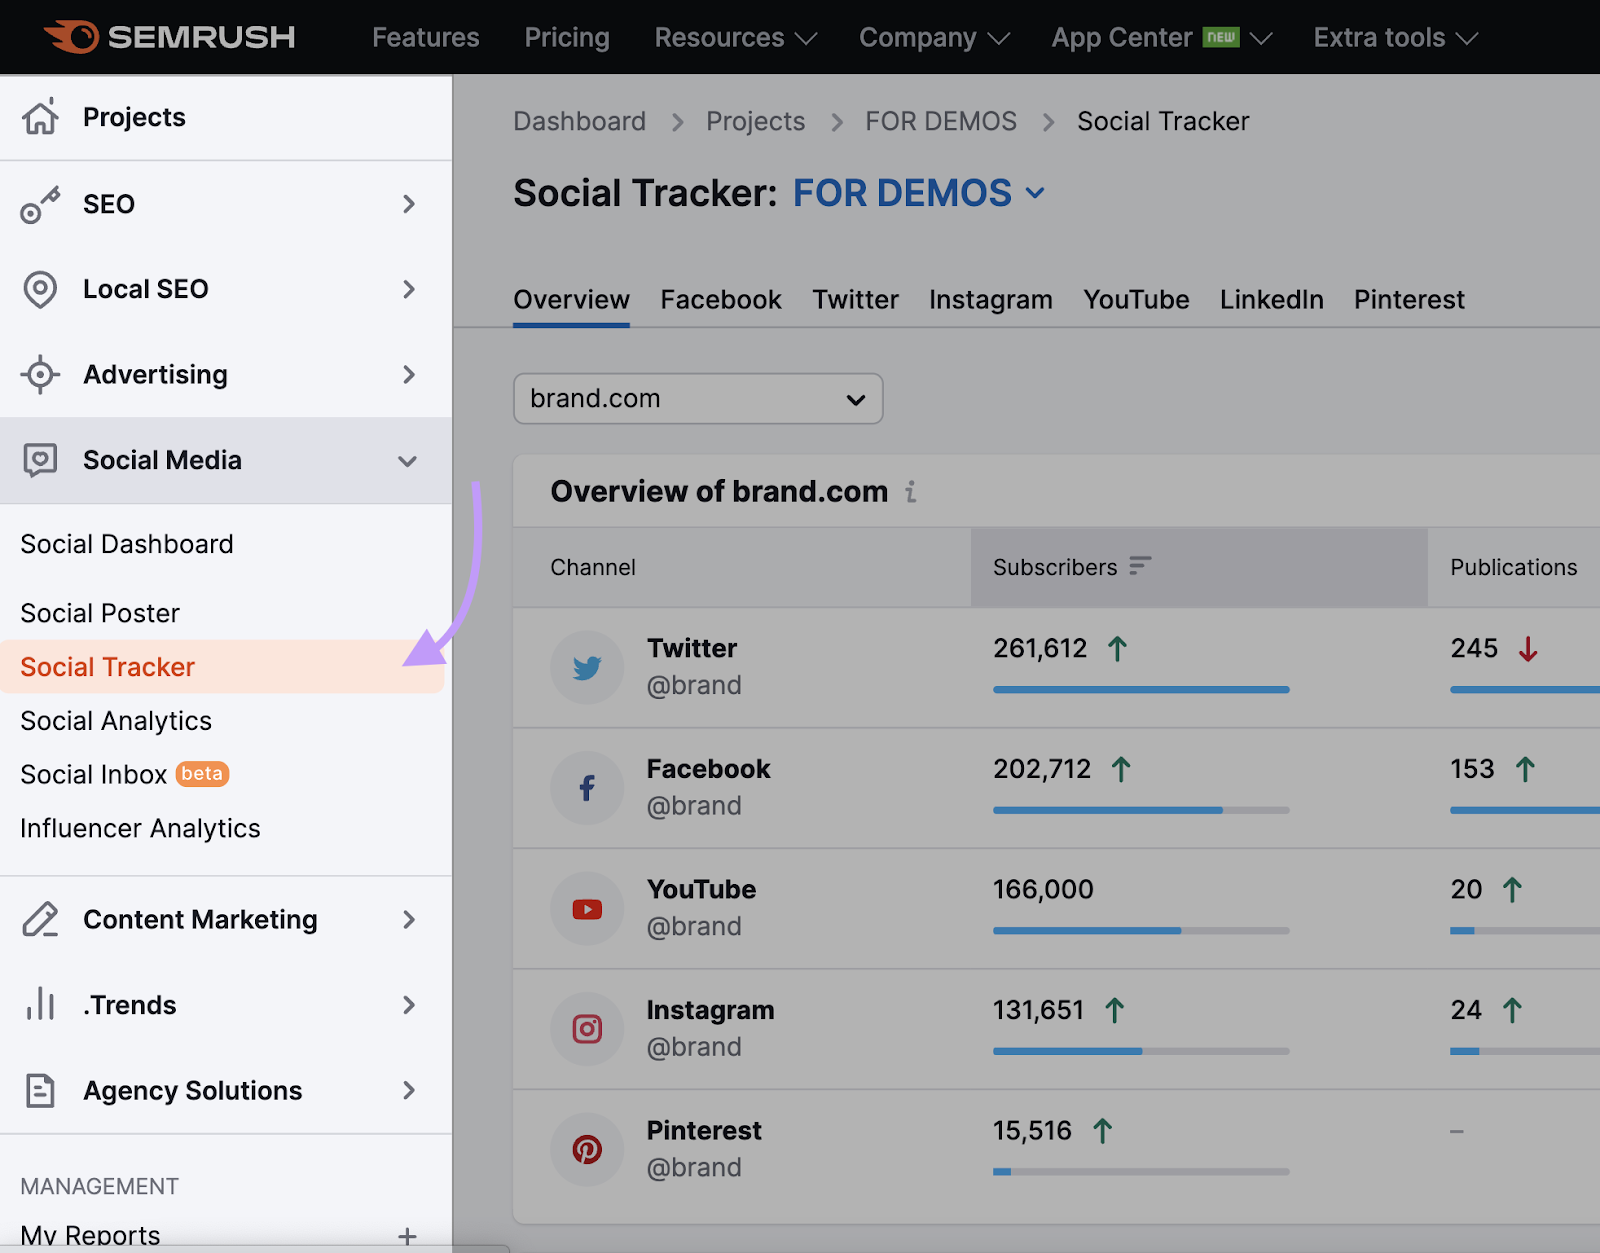 “Social Tracker” highlighted in the sidebar menu